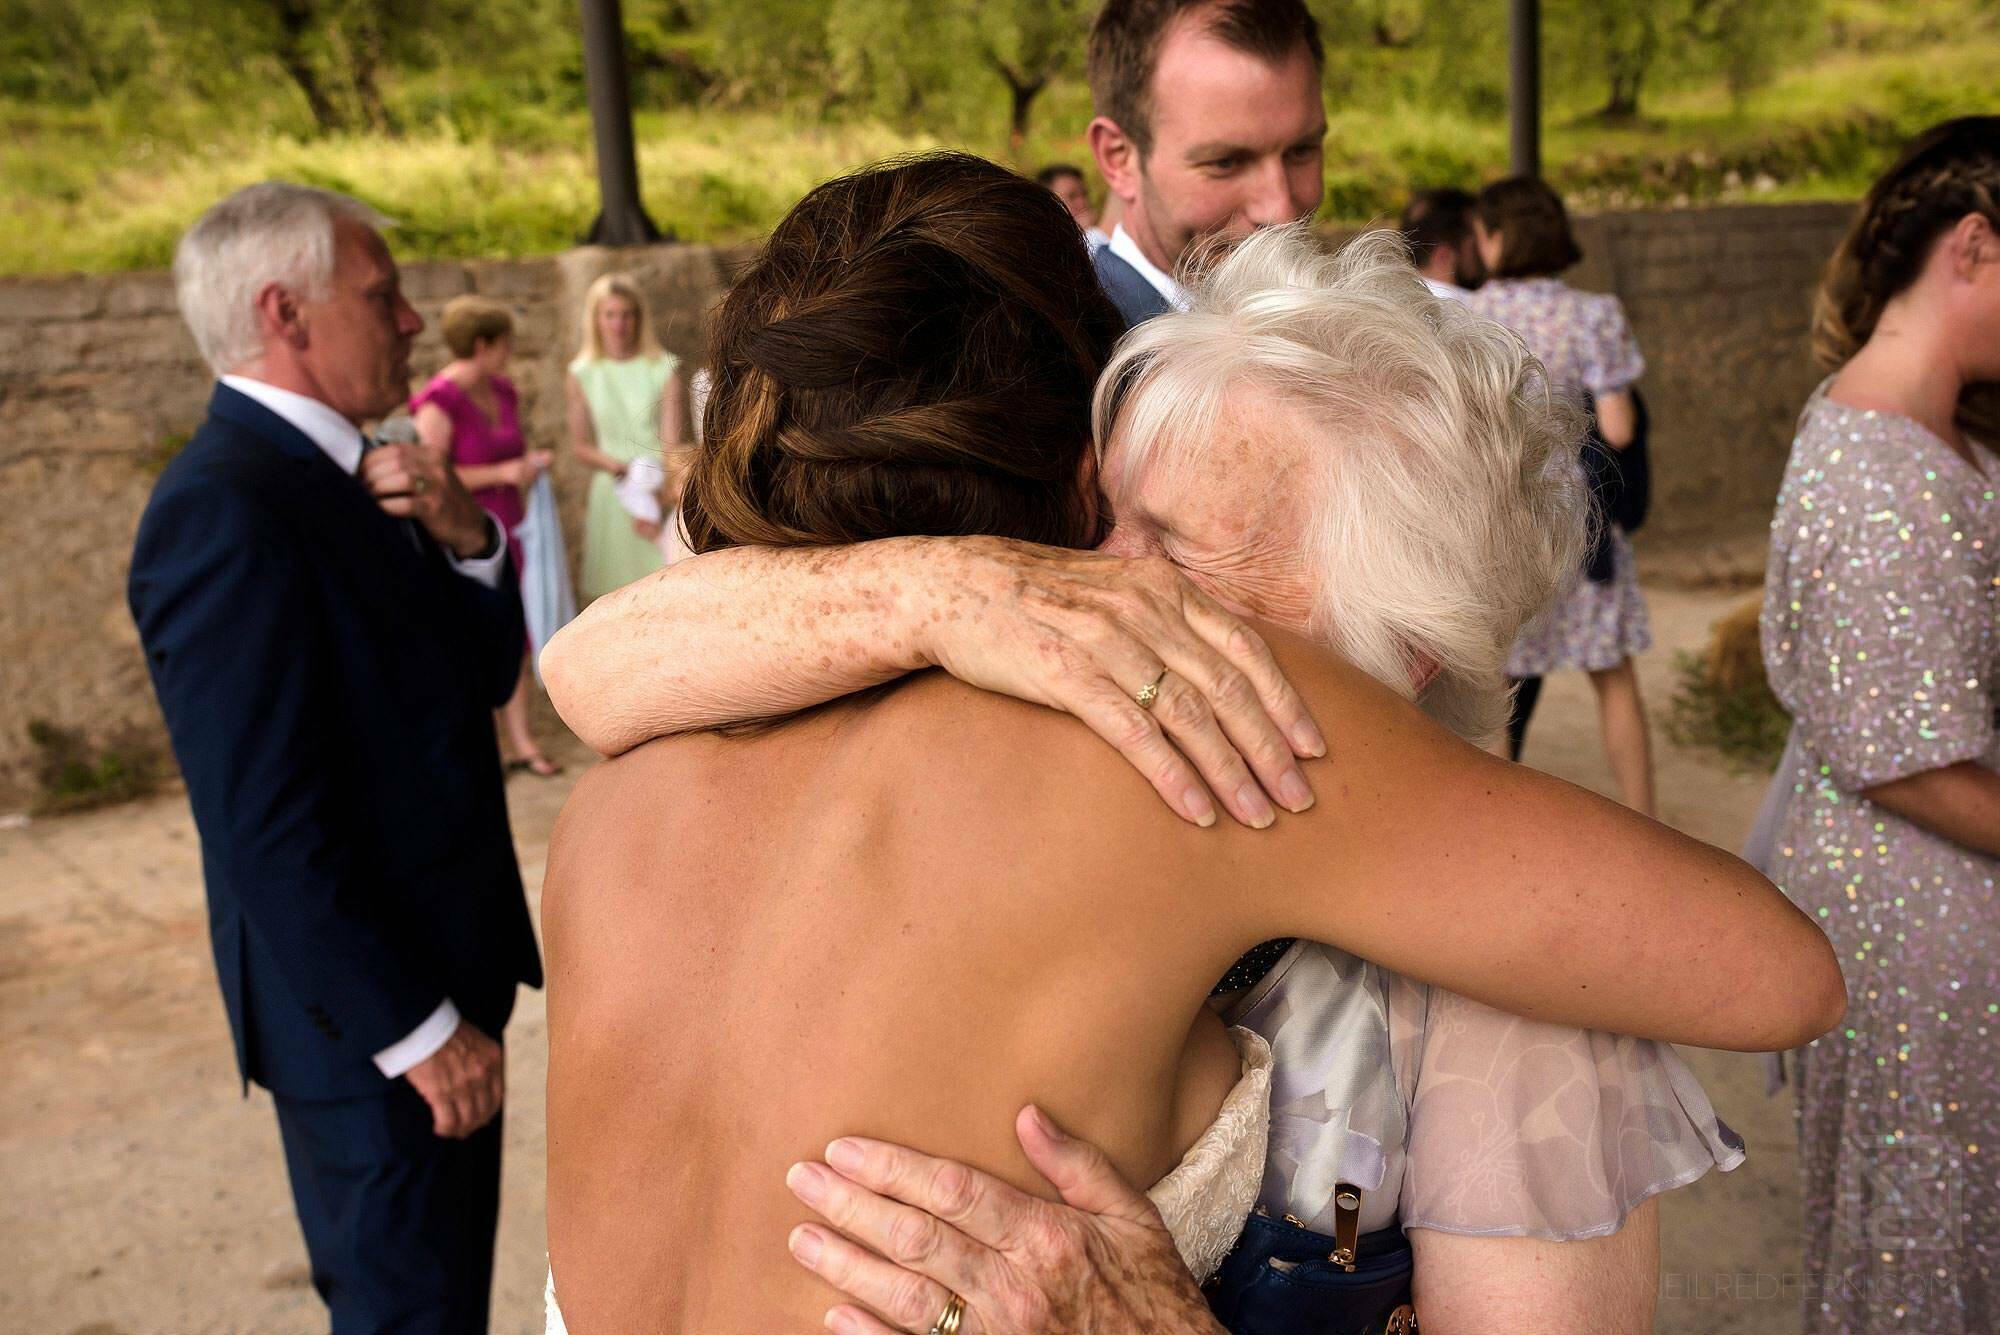 bride hugging grandmother